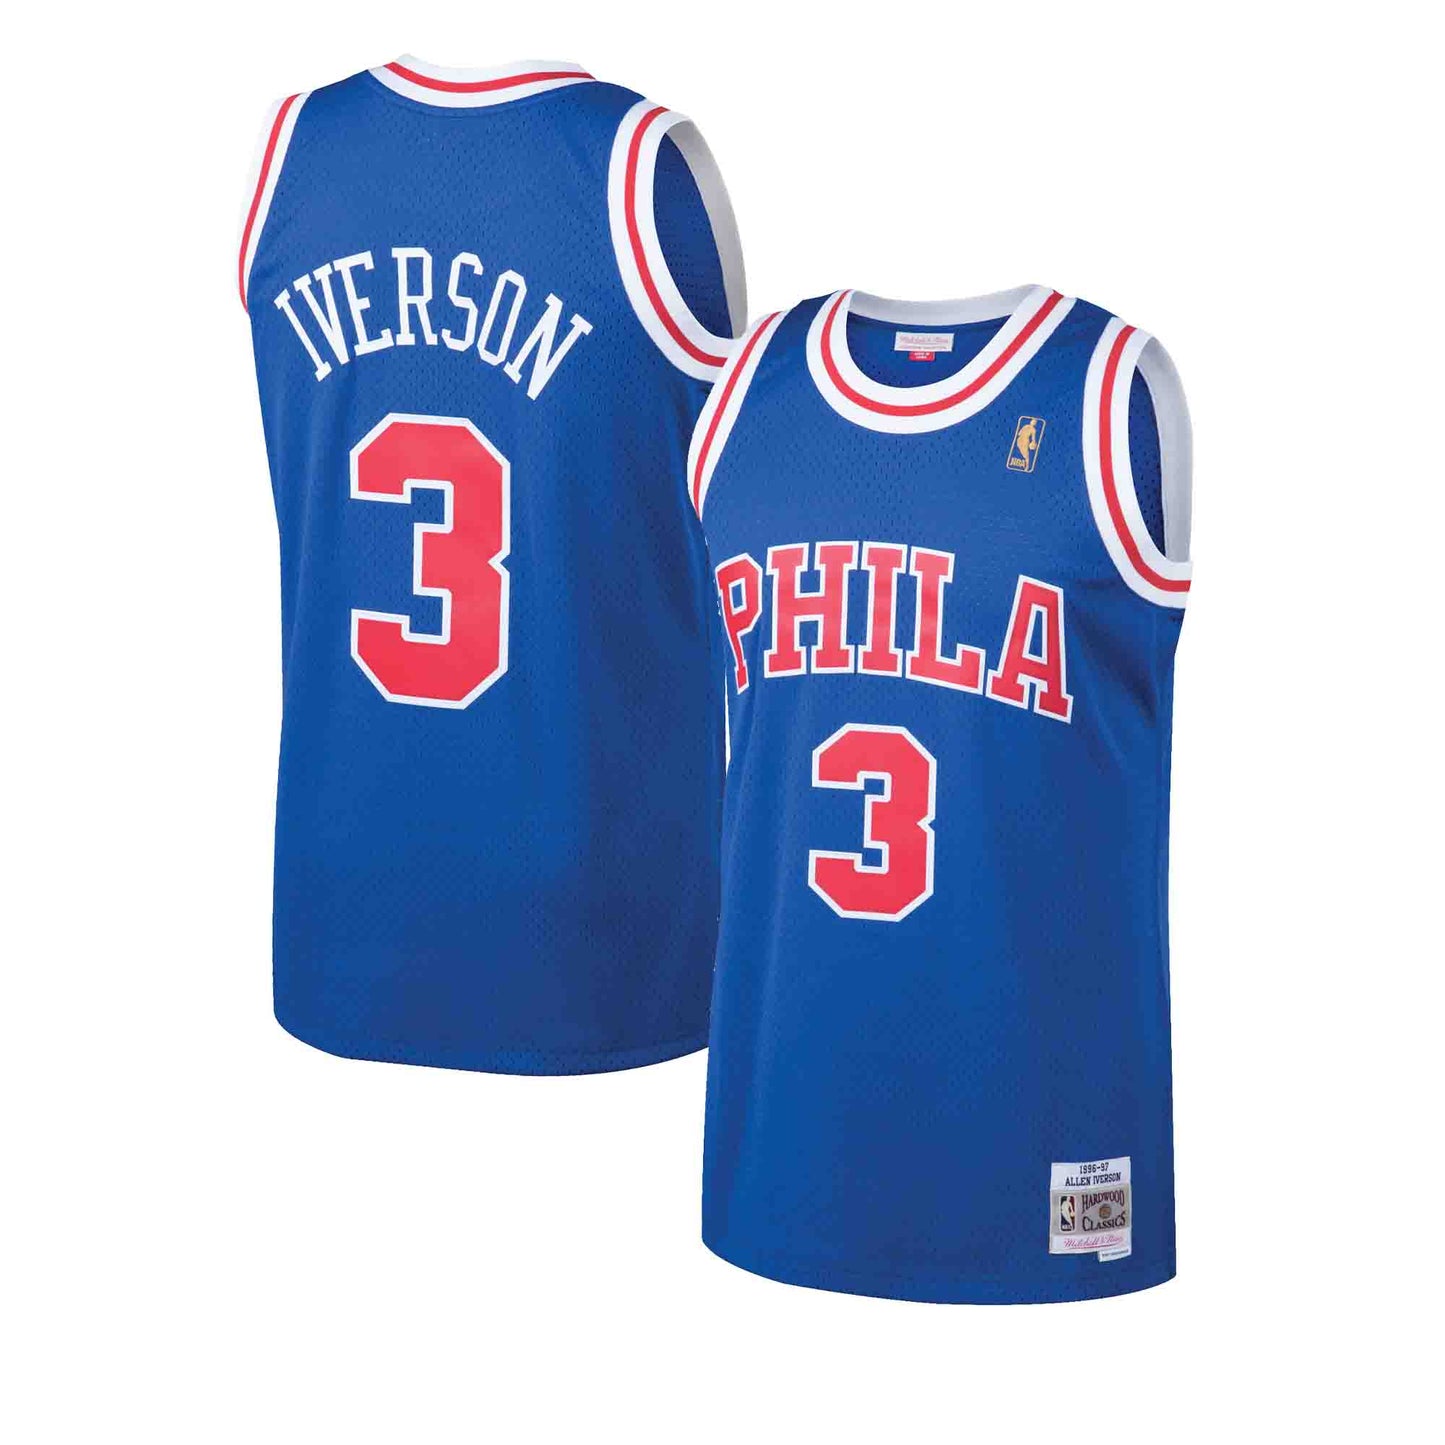 Allen Iverson Jerseys, Allen Iverson Shirt, NBA Allen Iverson Gear